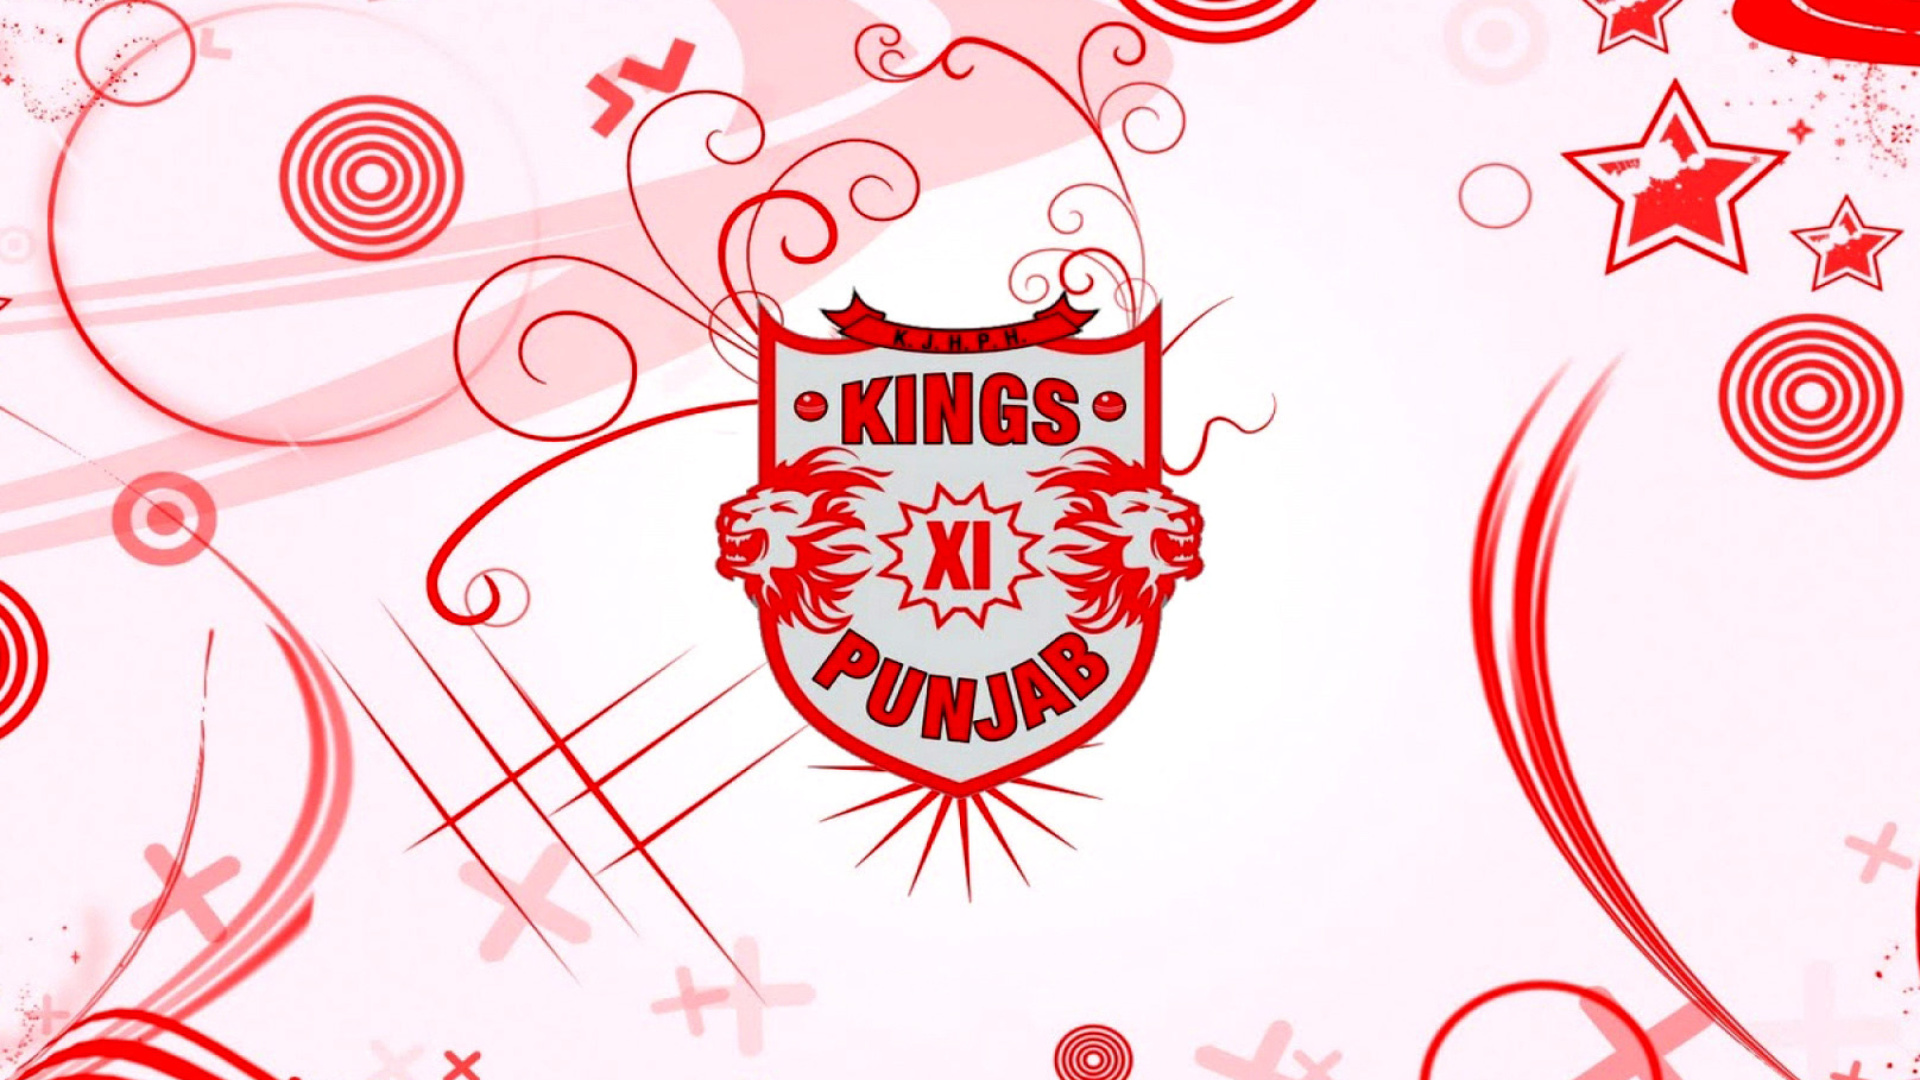 Sfondi Kings Xi Punjab 1920x1080